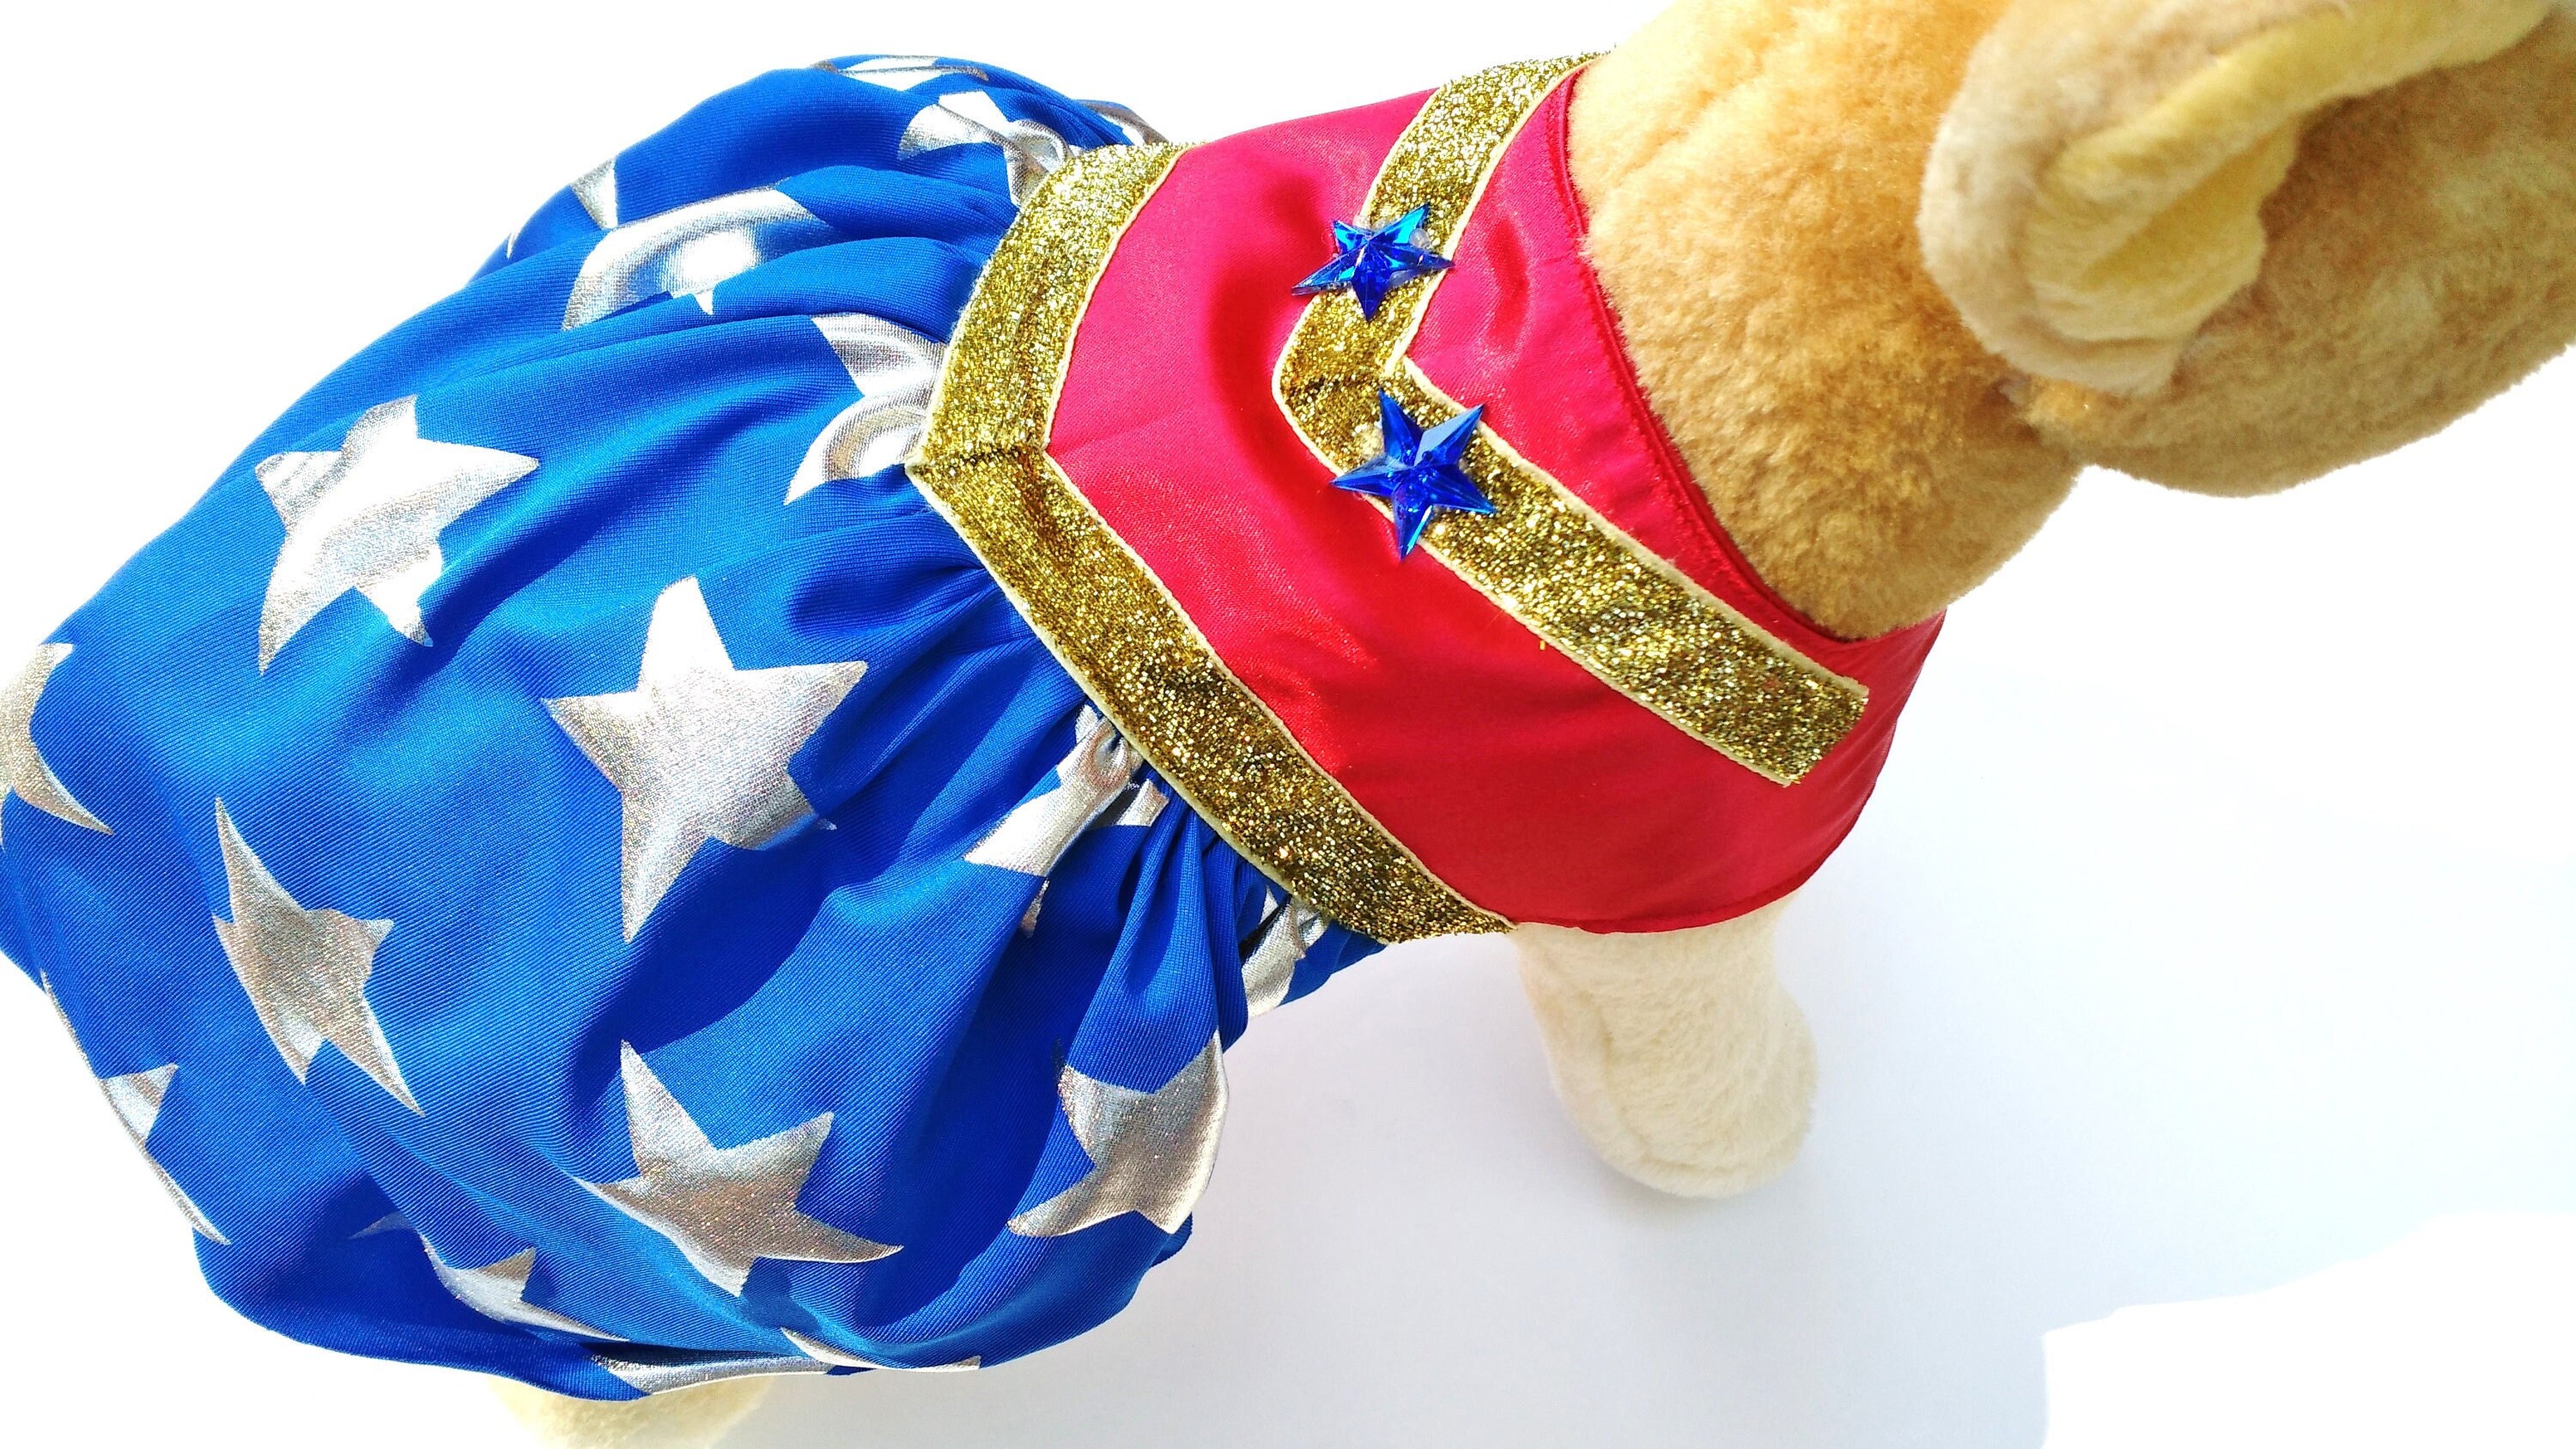 Wonder Woman Dog's Costume